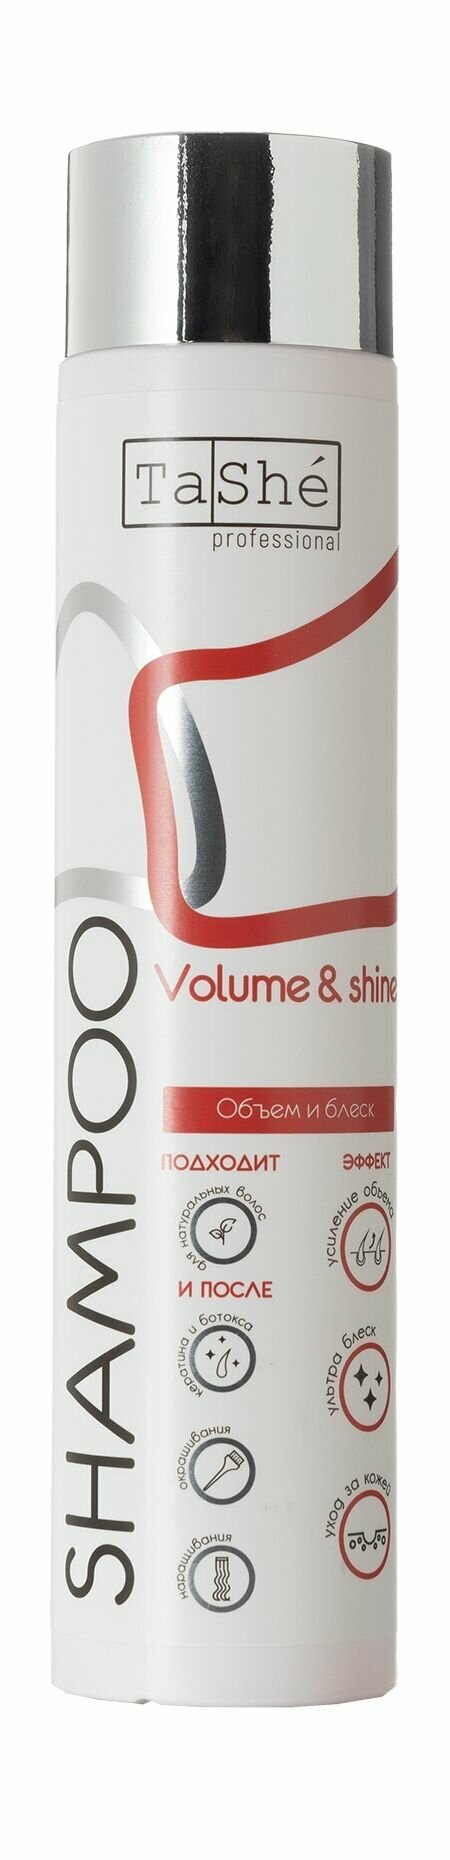 Шампунь для блеска и объема волос / Tashe Professional Volume and Shine Shampoo